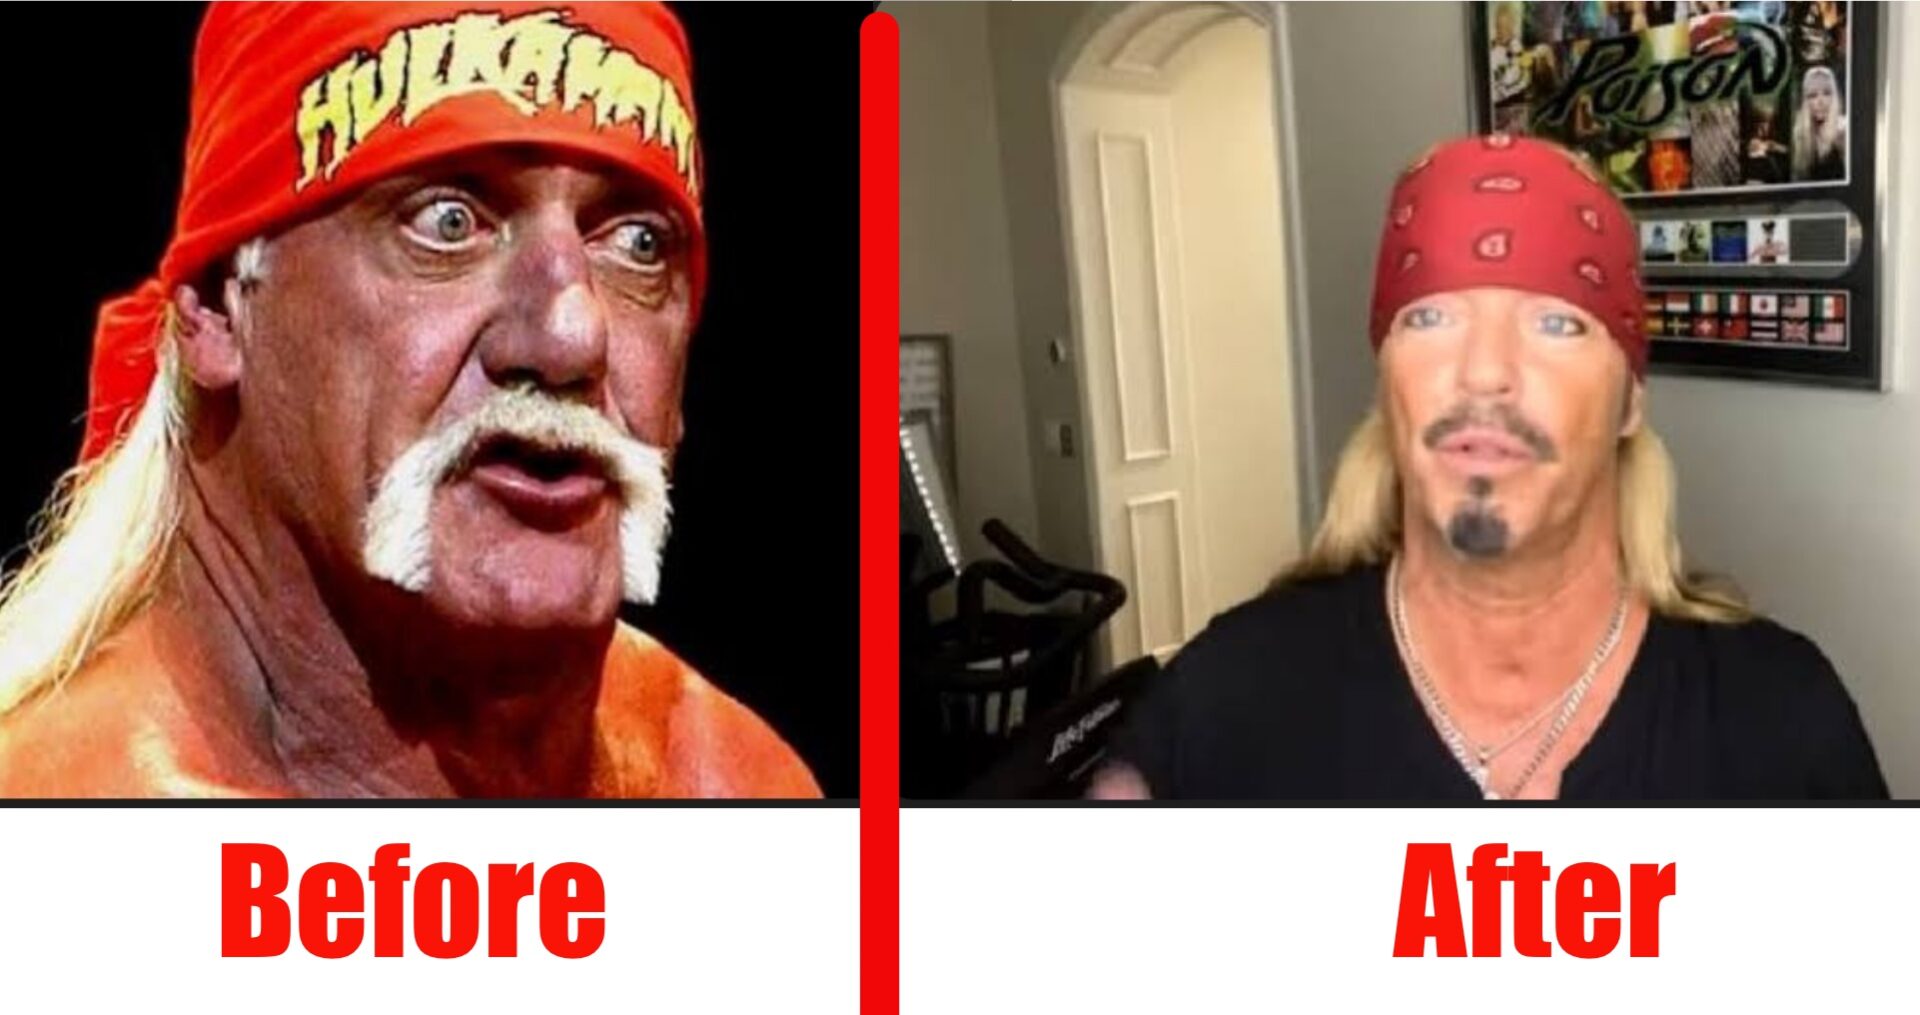 Hulk Hogan looks decades younger following plastic surgery